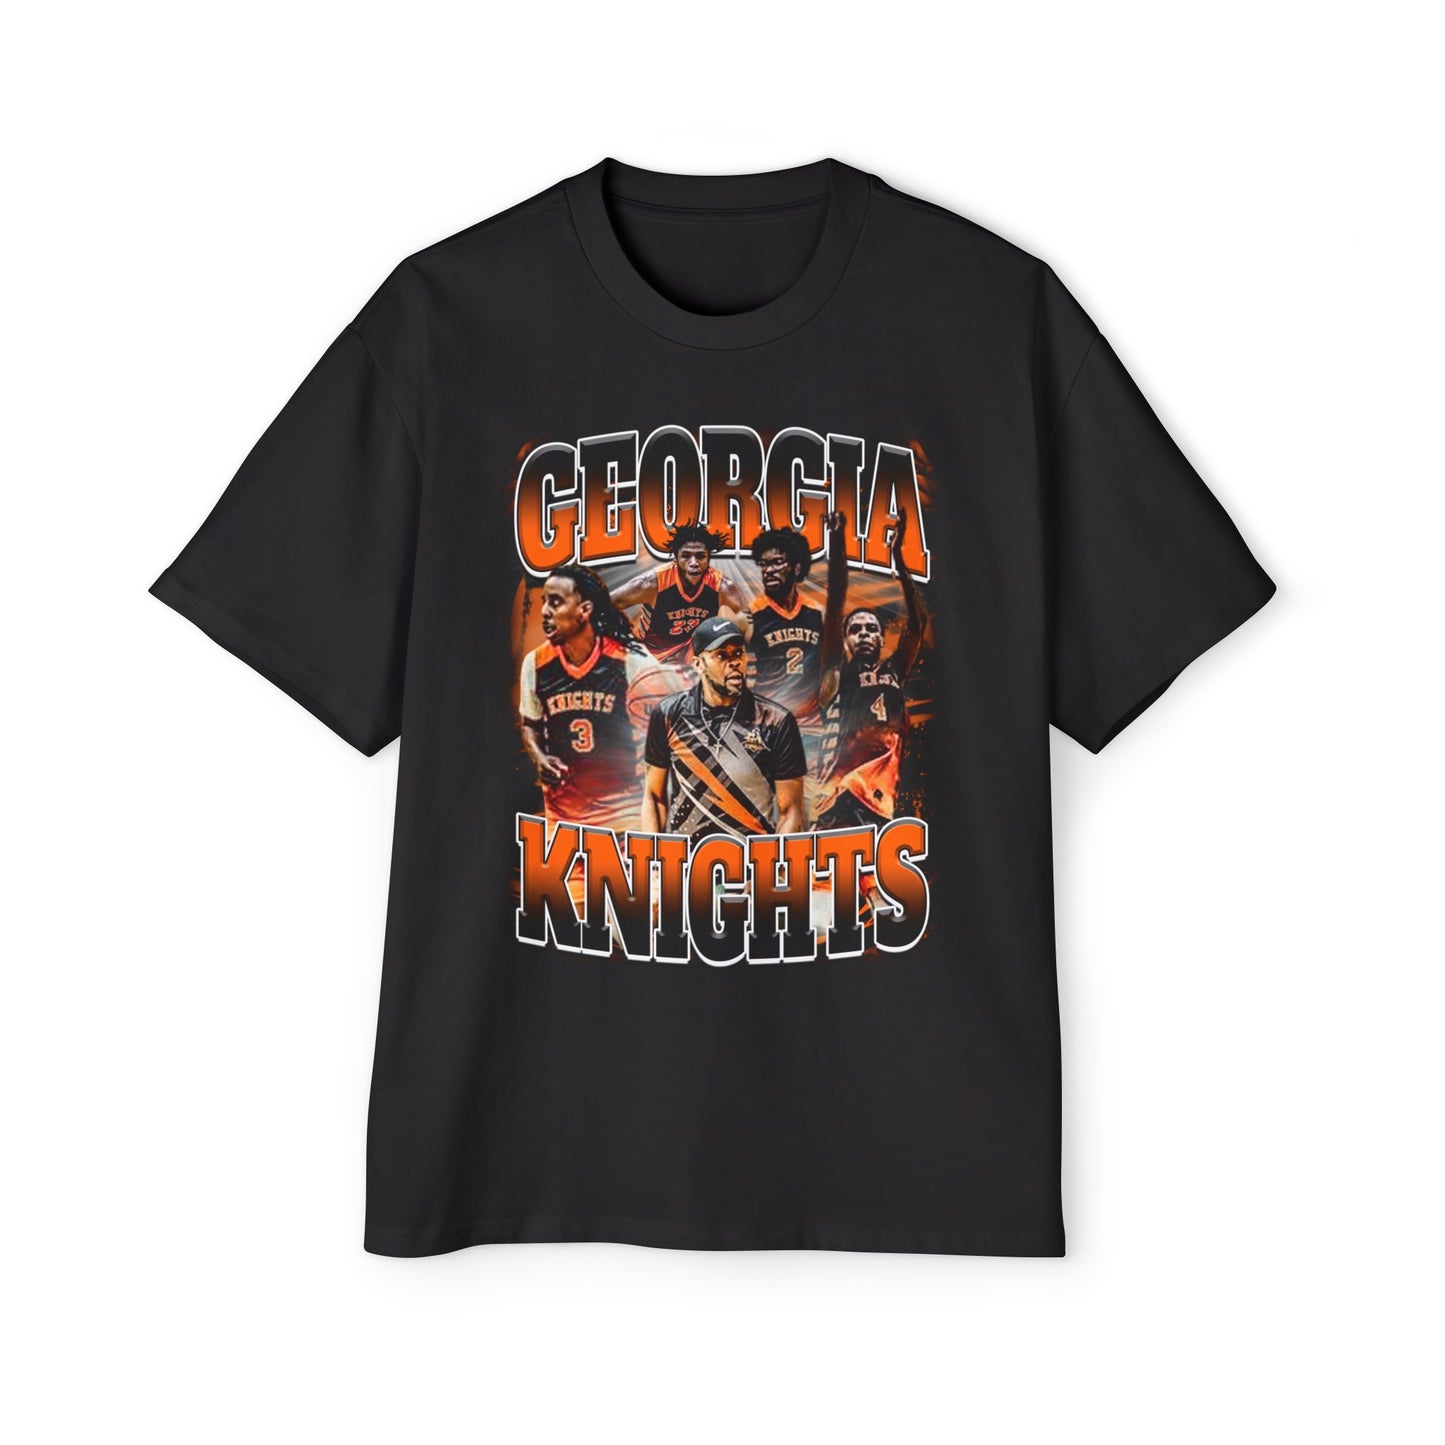 Georgia Knights Oversized Tee